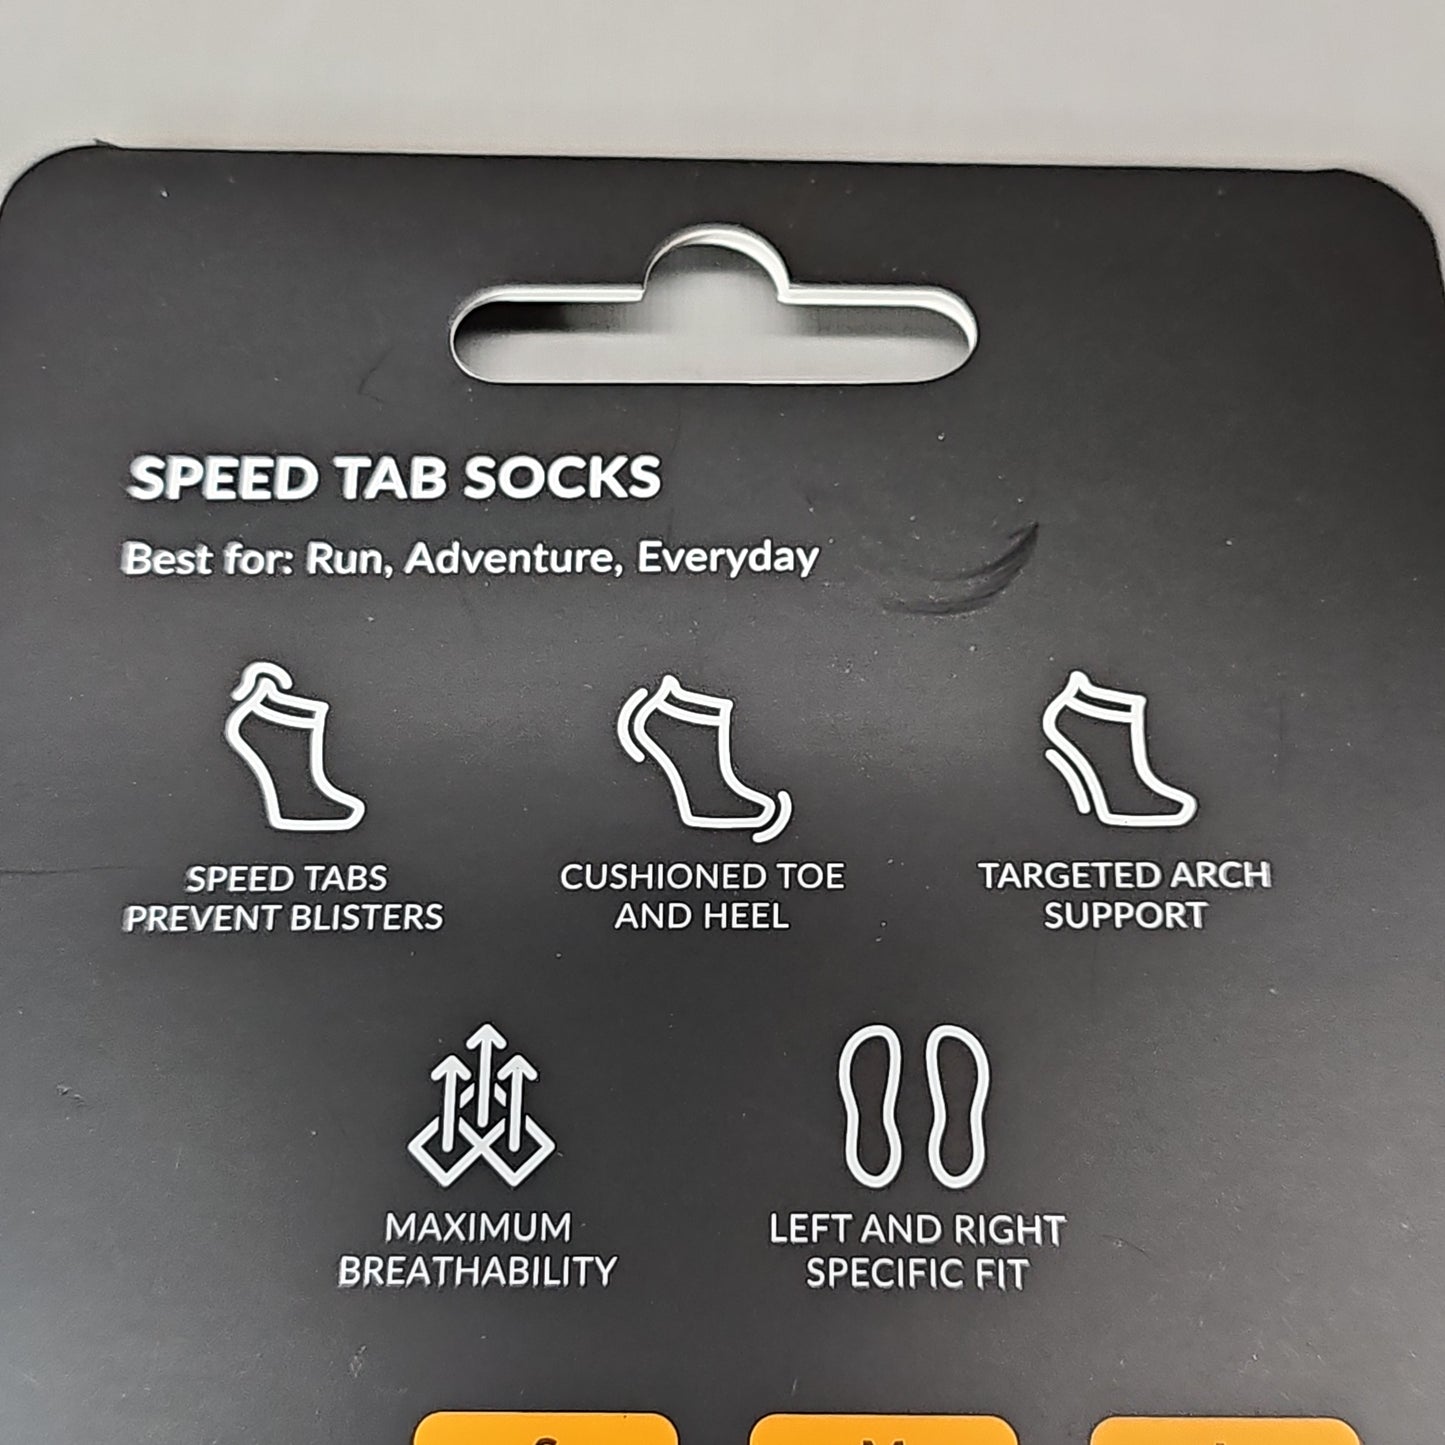 NATHAN Speed Tab Low Cut Socks Unisex Sz M Black NS10580-00001-M (New)